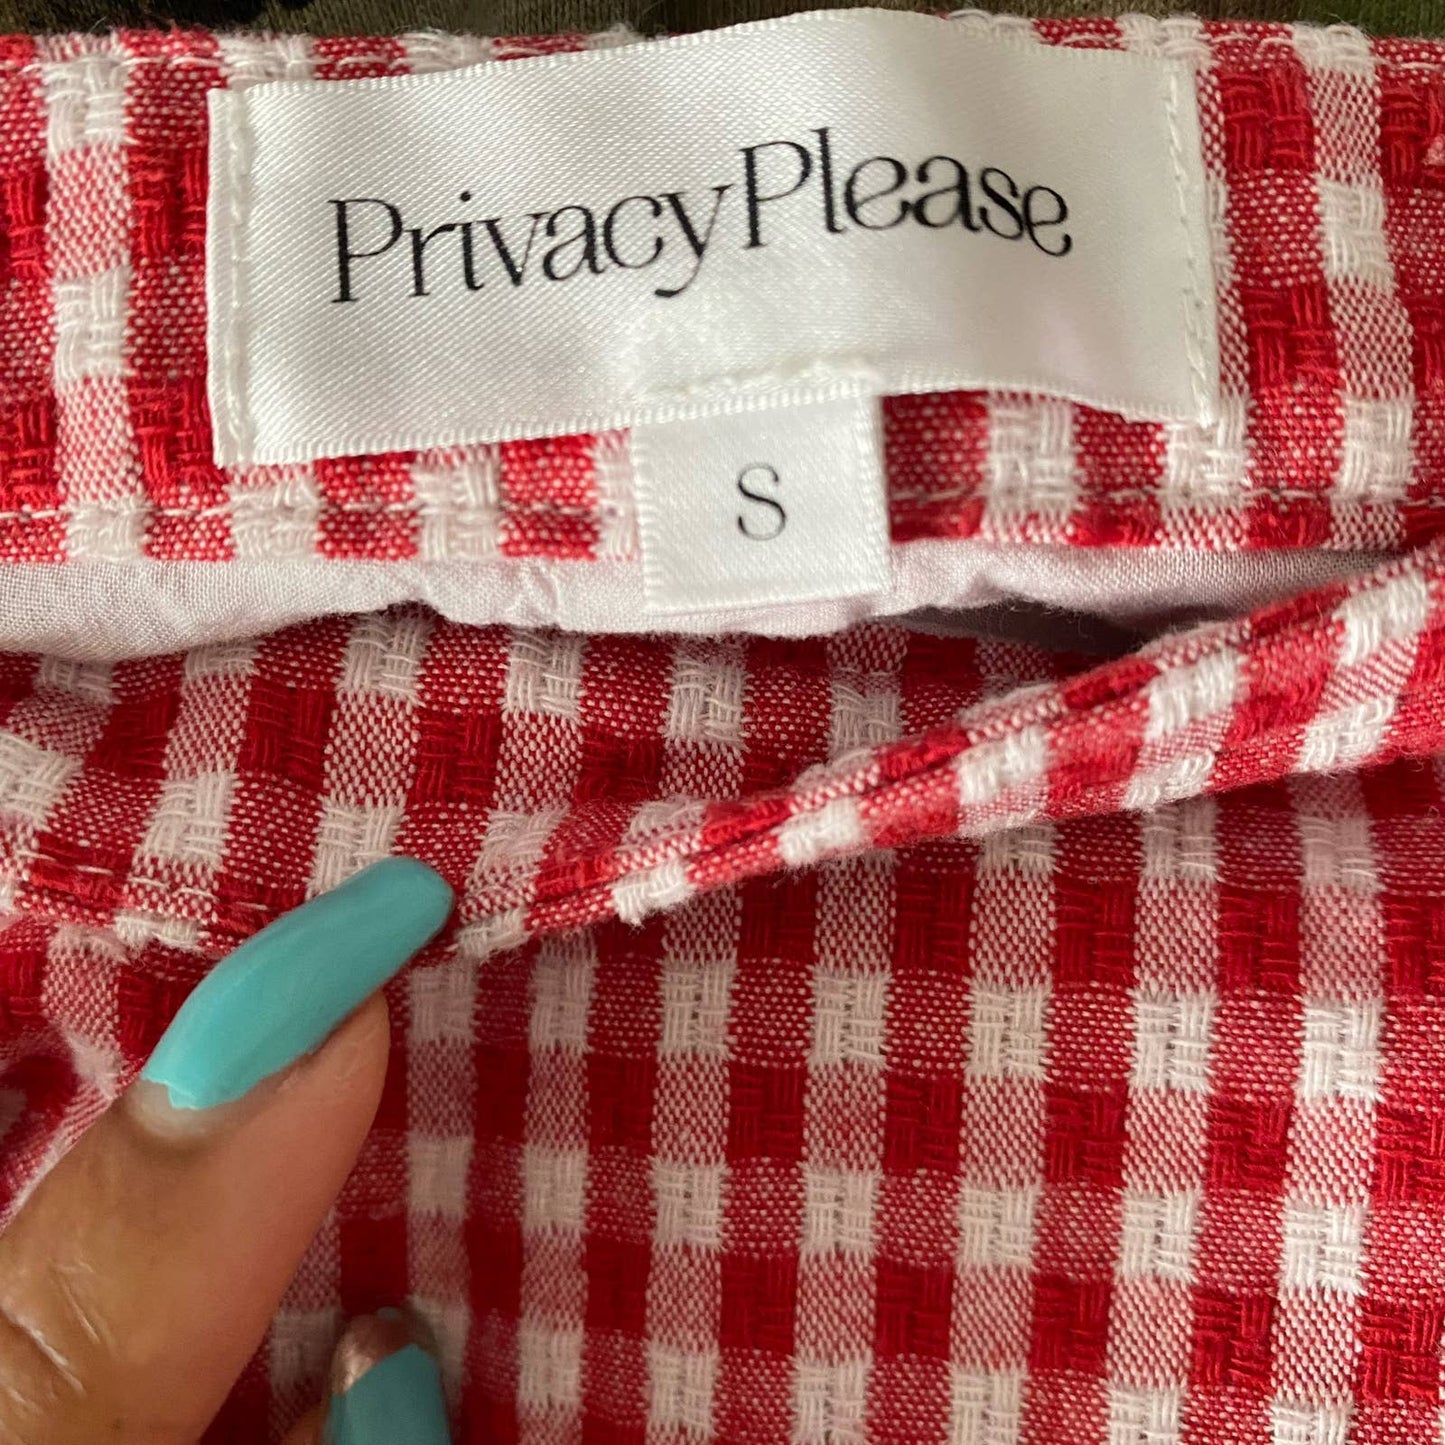 Privacy Please sz S plaid high waisted vintage inspired slack pants